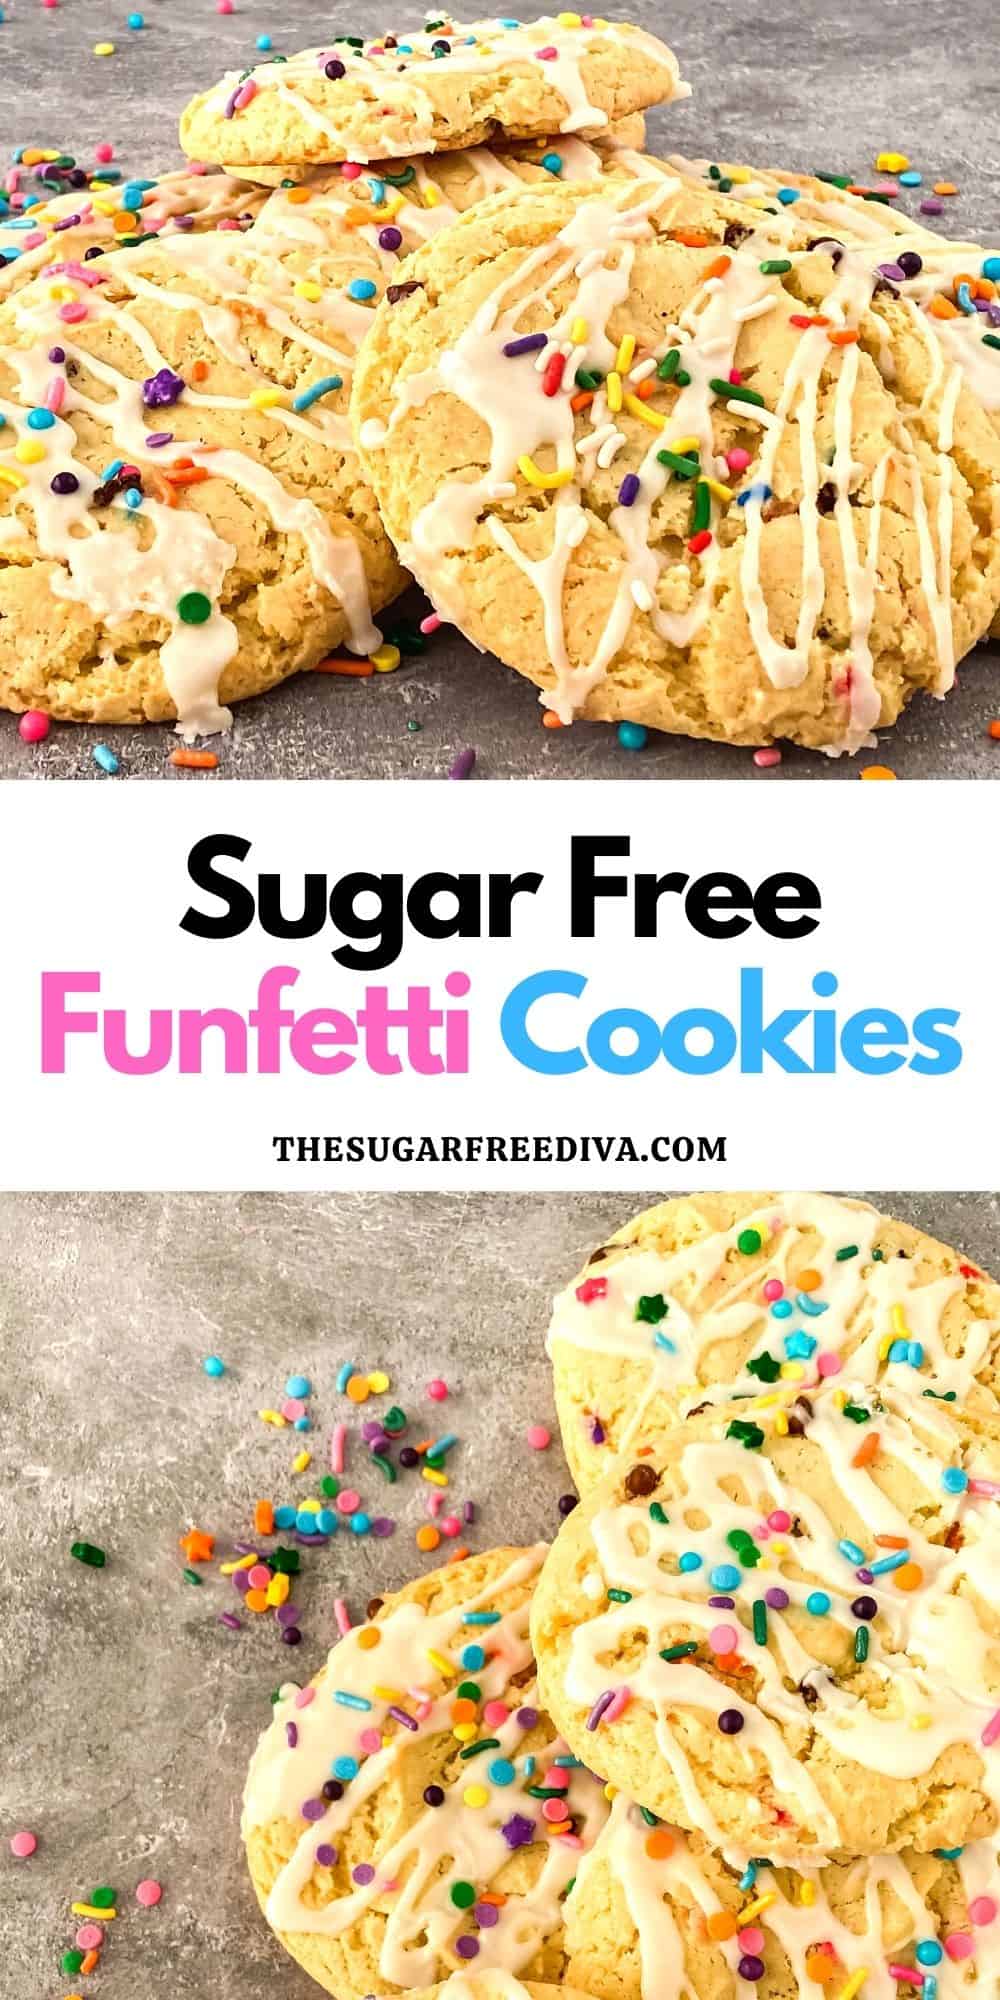 Sugar Free Funfetti Cookies - THE SUGAR FREE DIVA